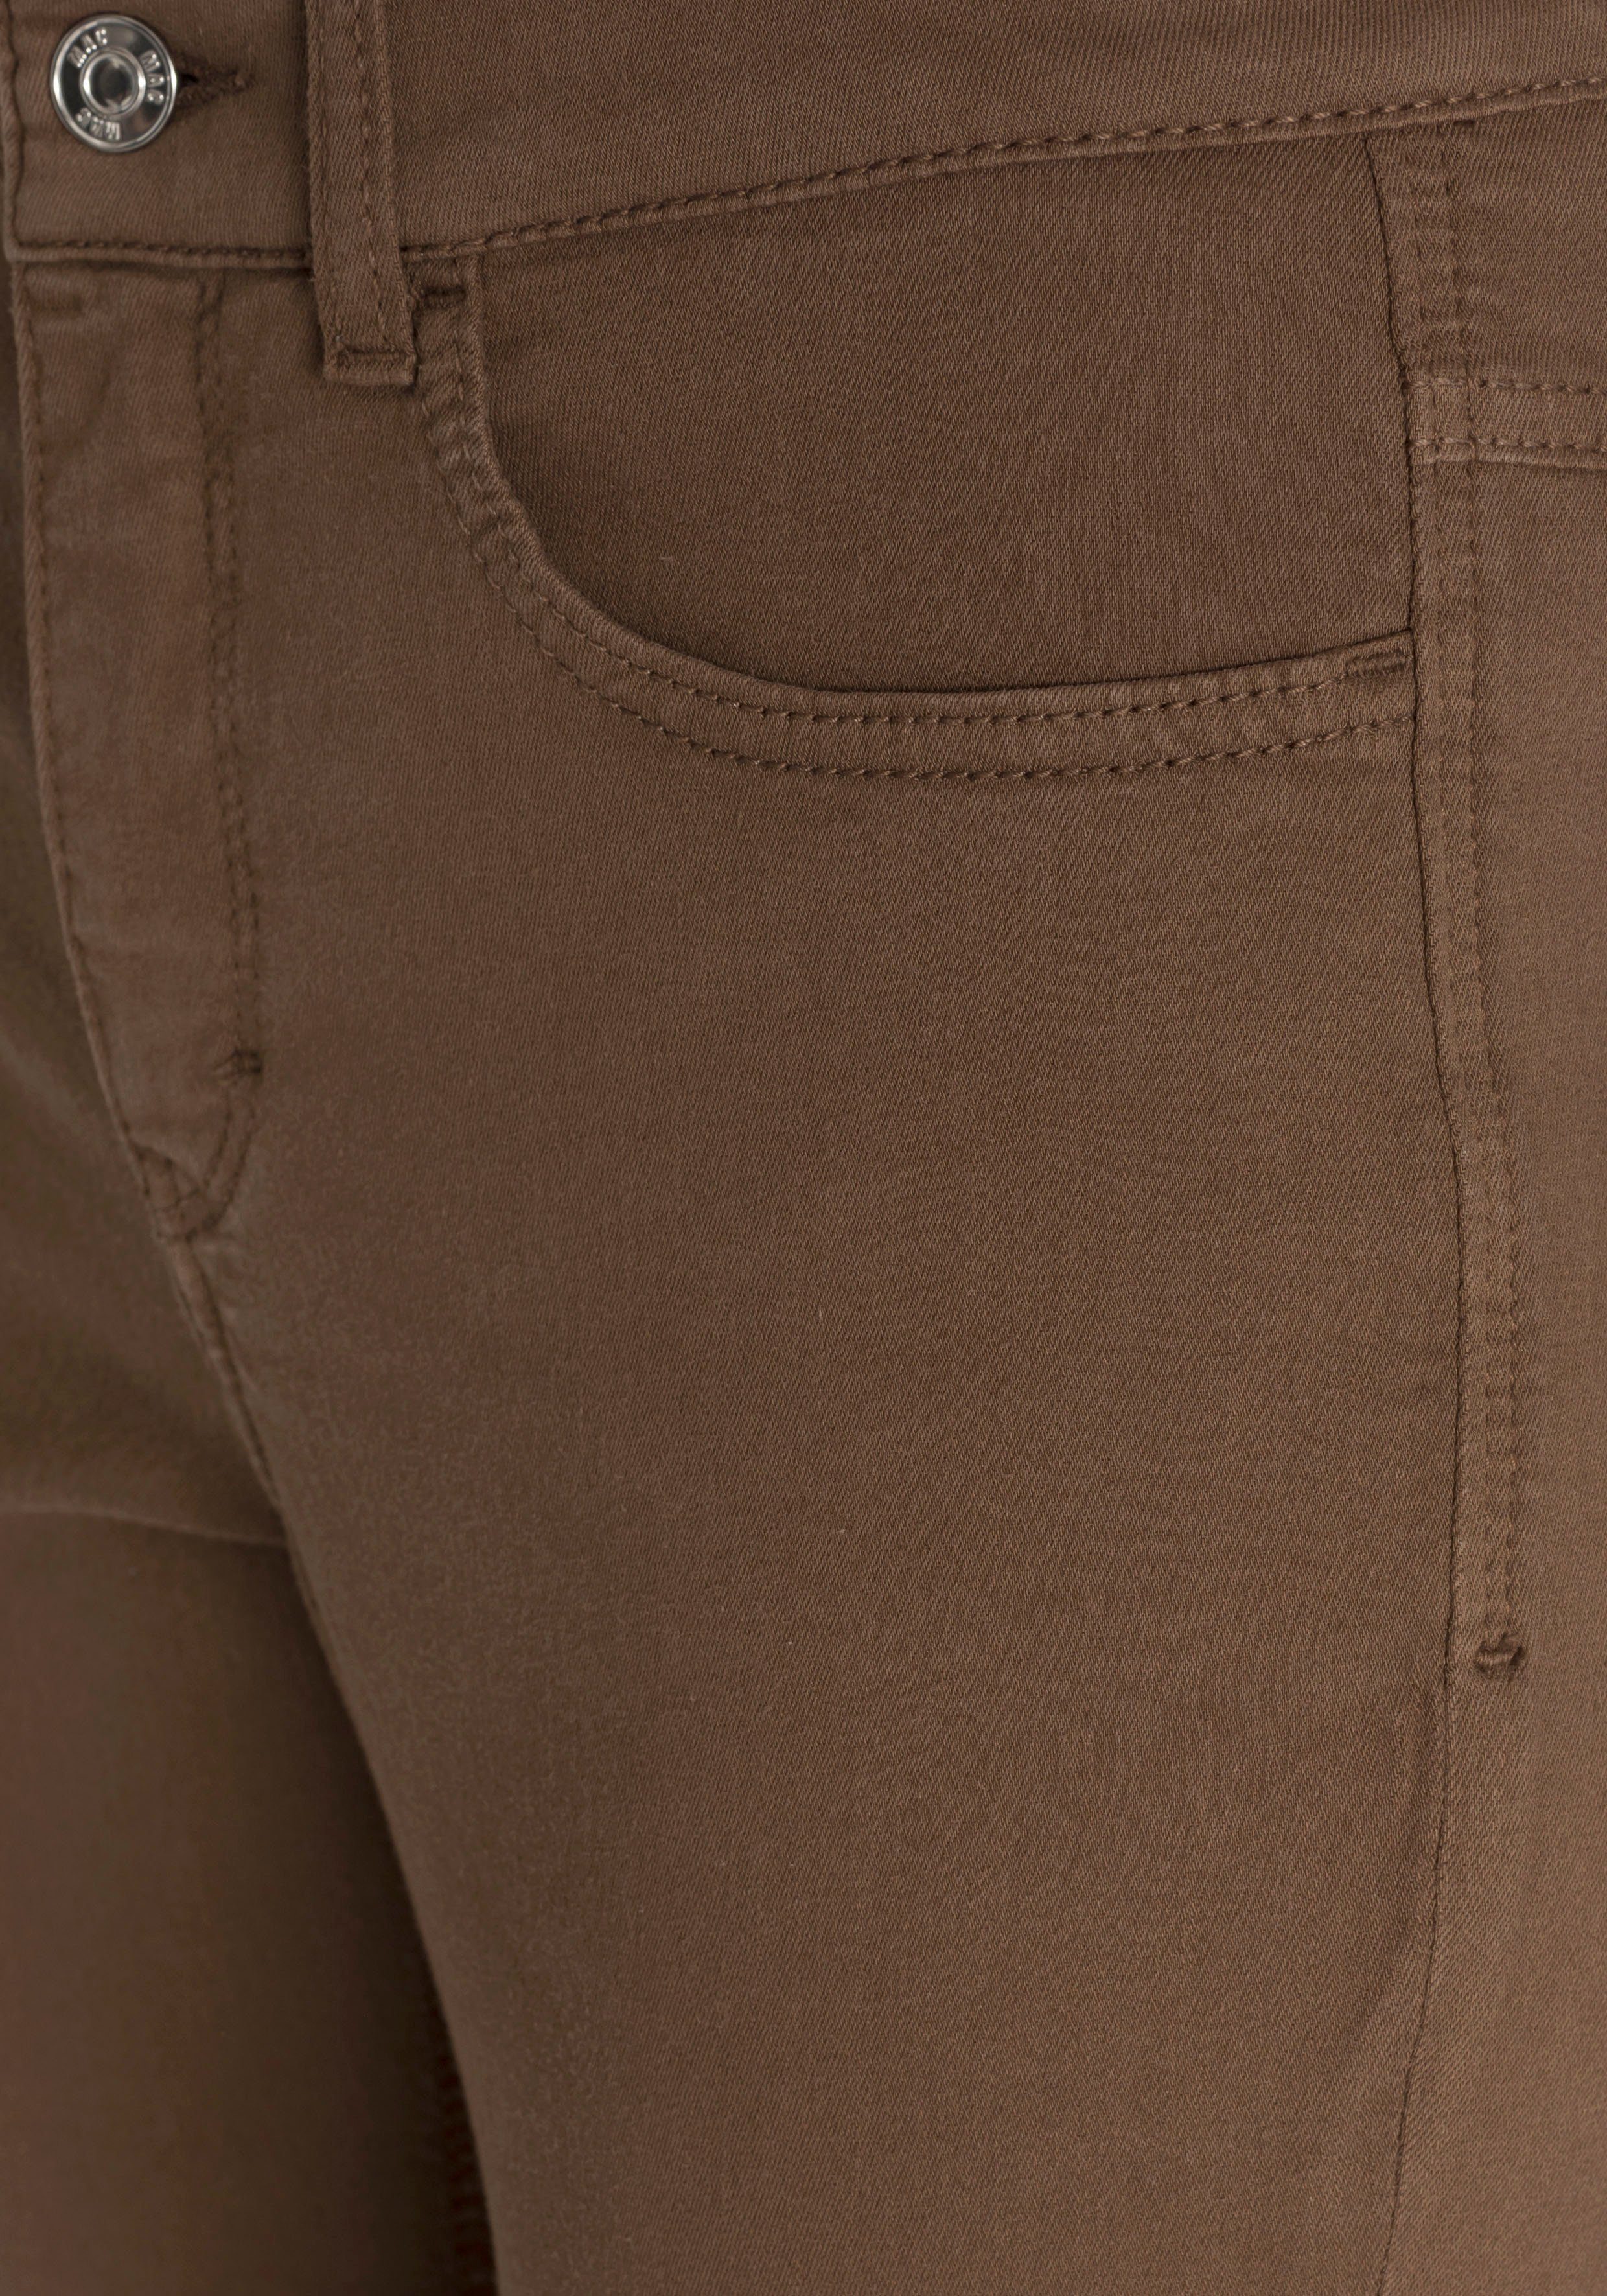 MAC Tag bequem ganzen fawn Qualität den sitzt Power-Stretch brown Skinny-fit-Jeans Hiperstretch-Skinny